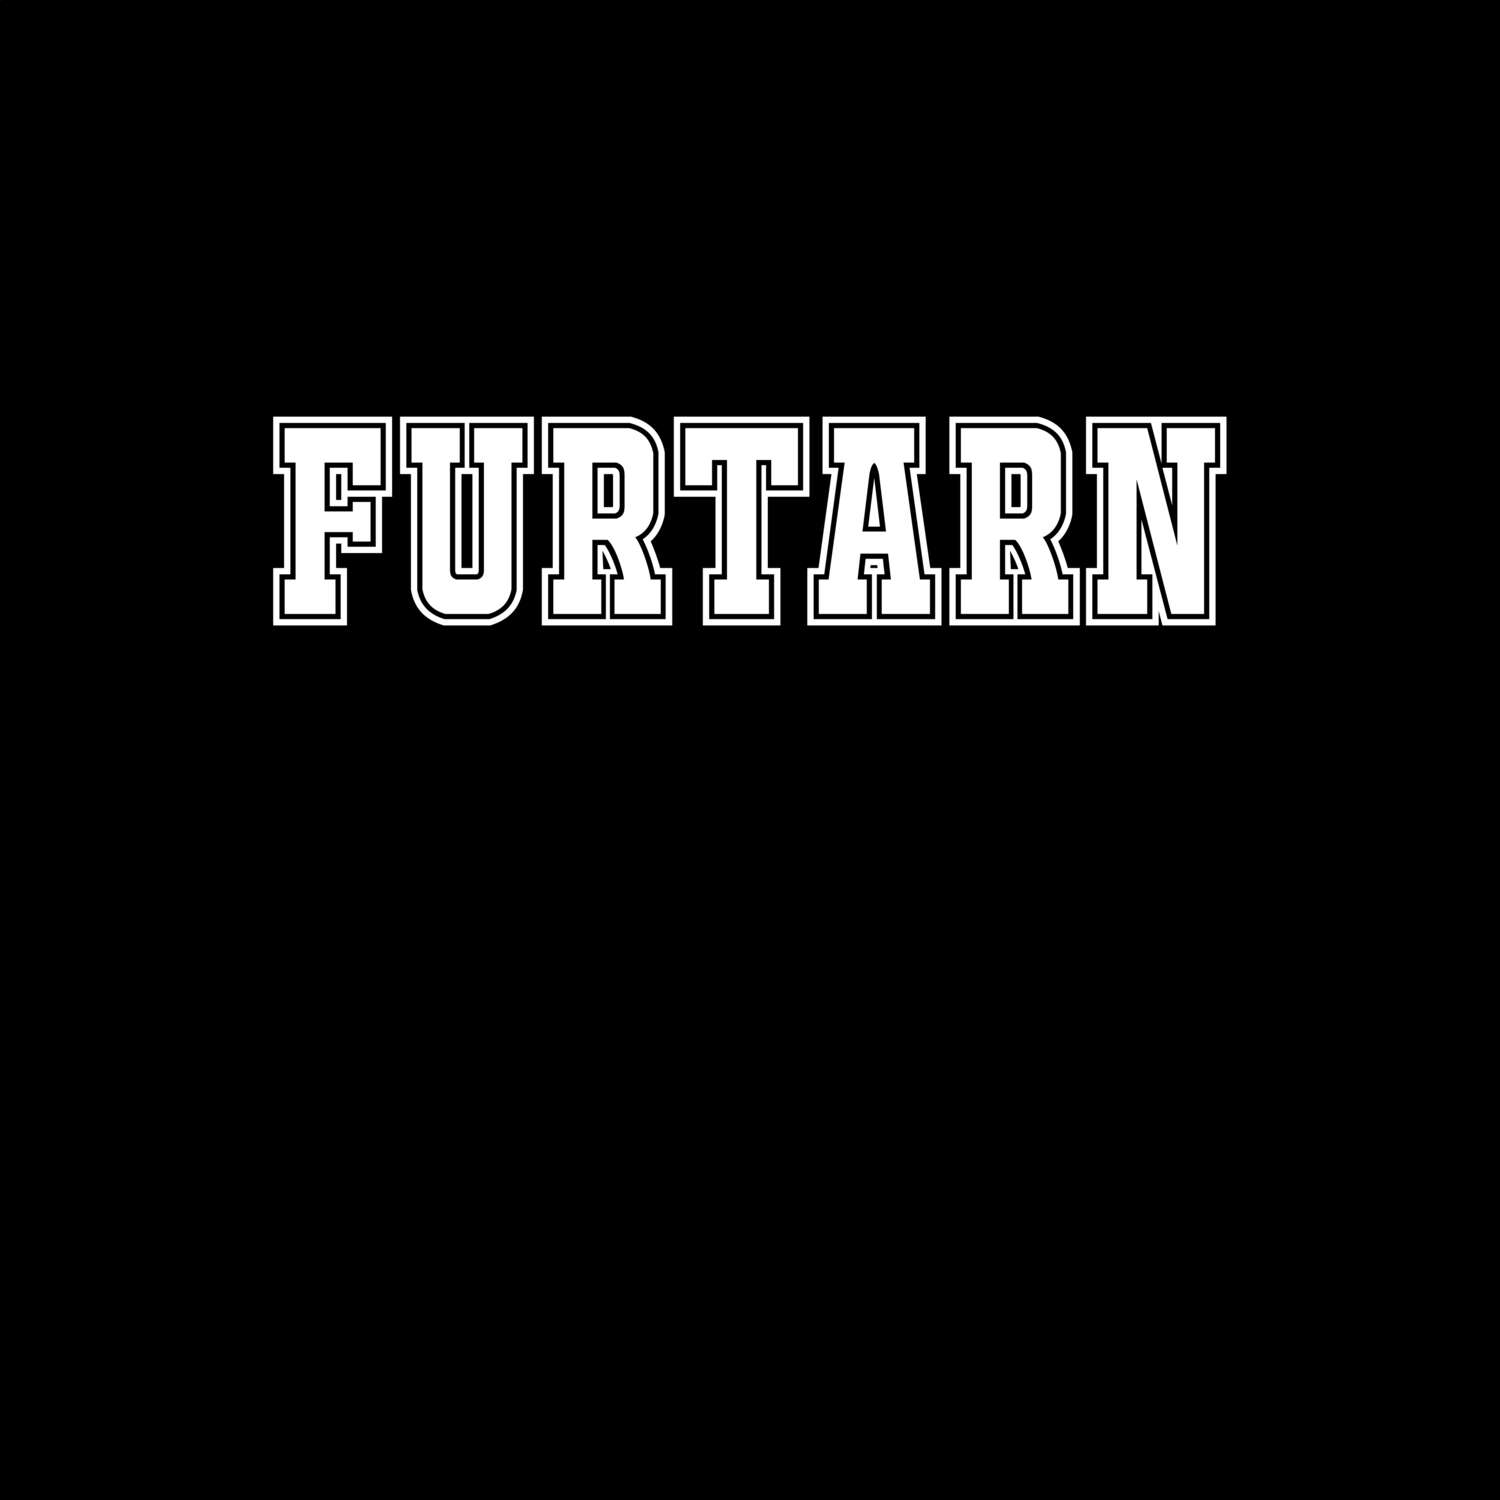 Furtarn T-Shirt »Classic«